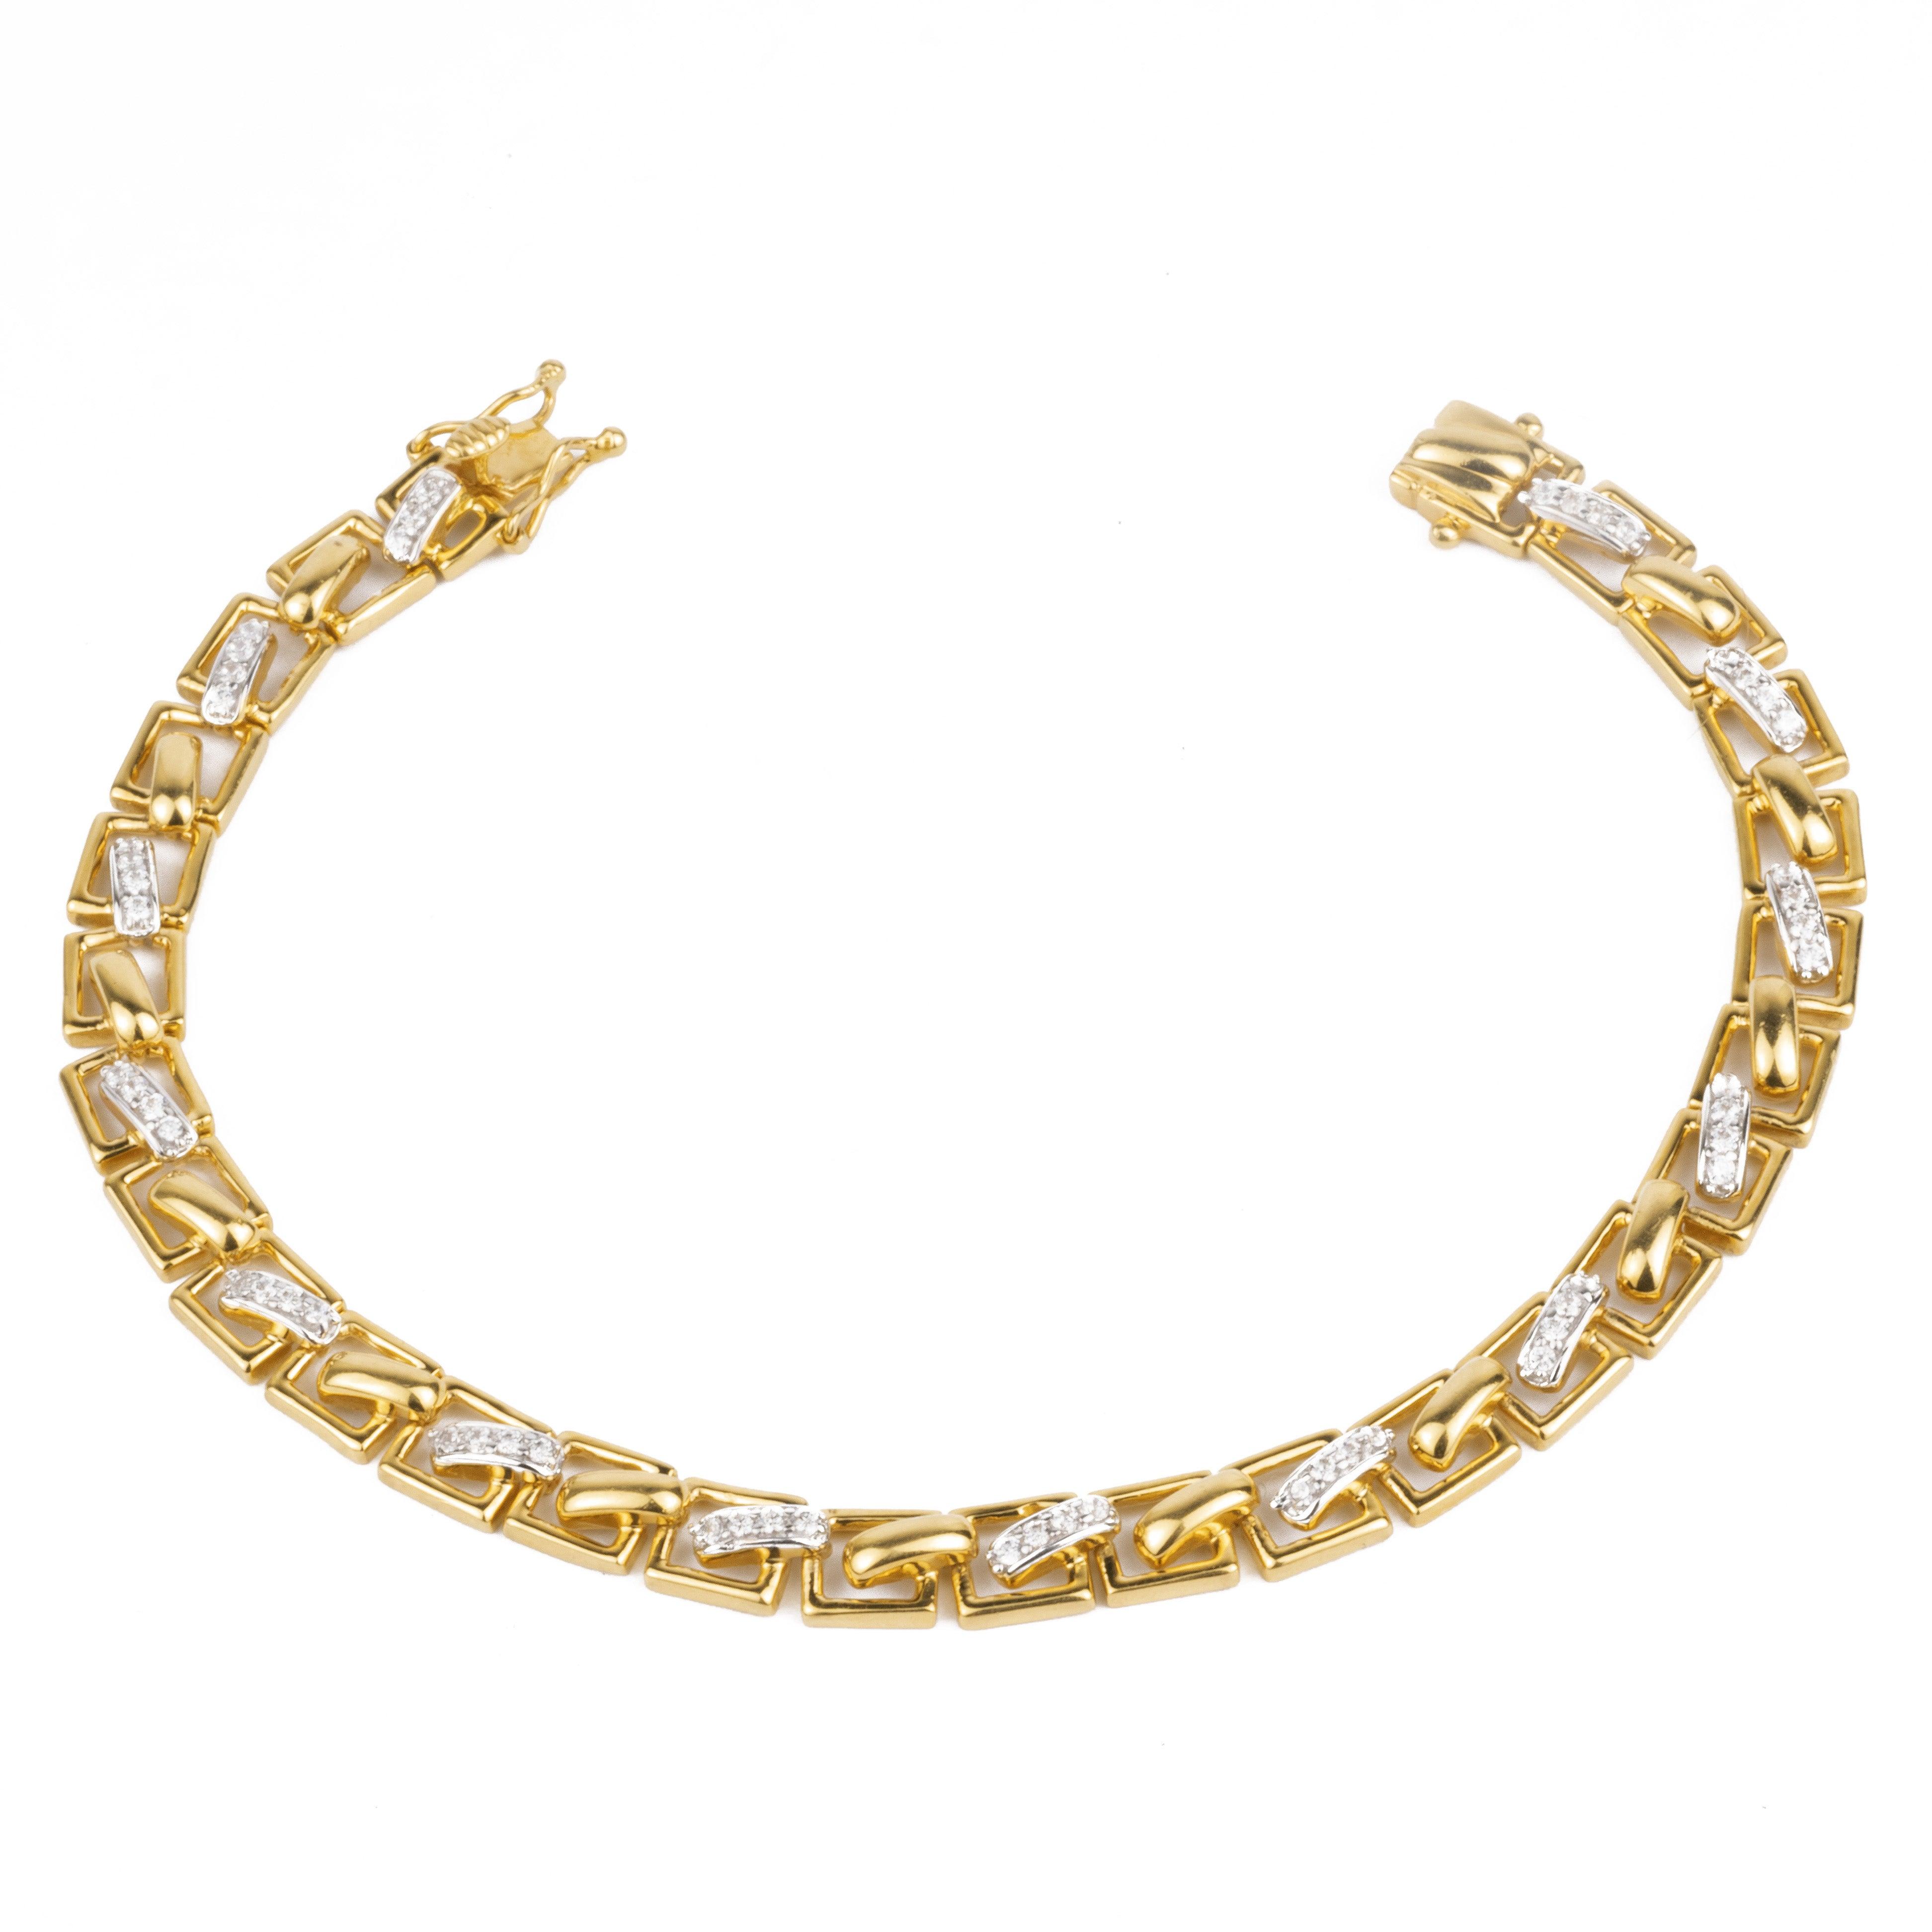 22ct Gold Bracelet with Cubic Zirconia Stones (20.52g) LBR-3983 - Minar Jewellers